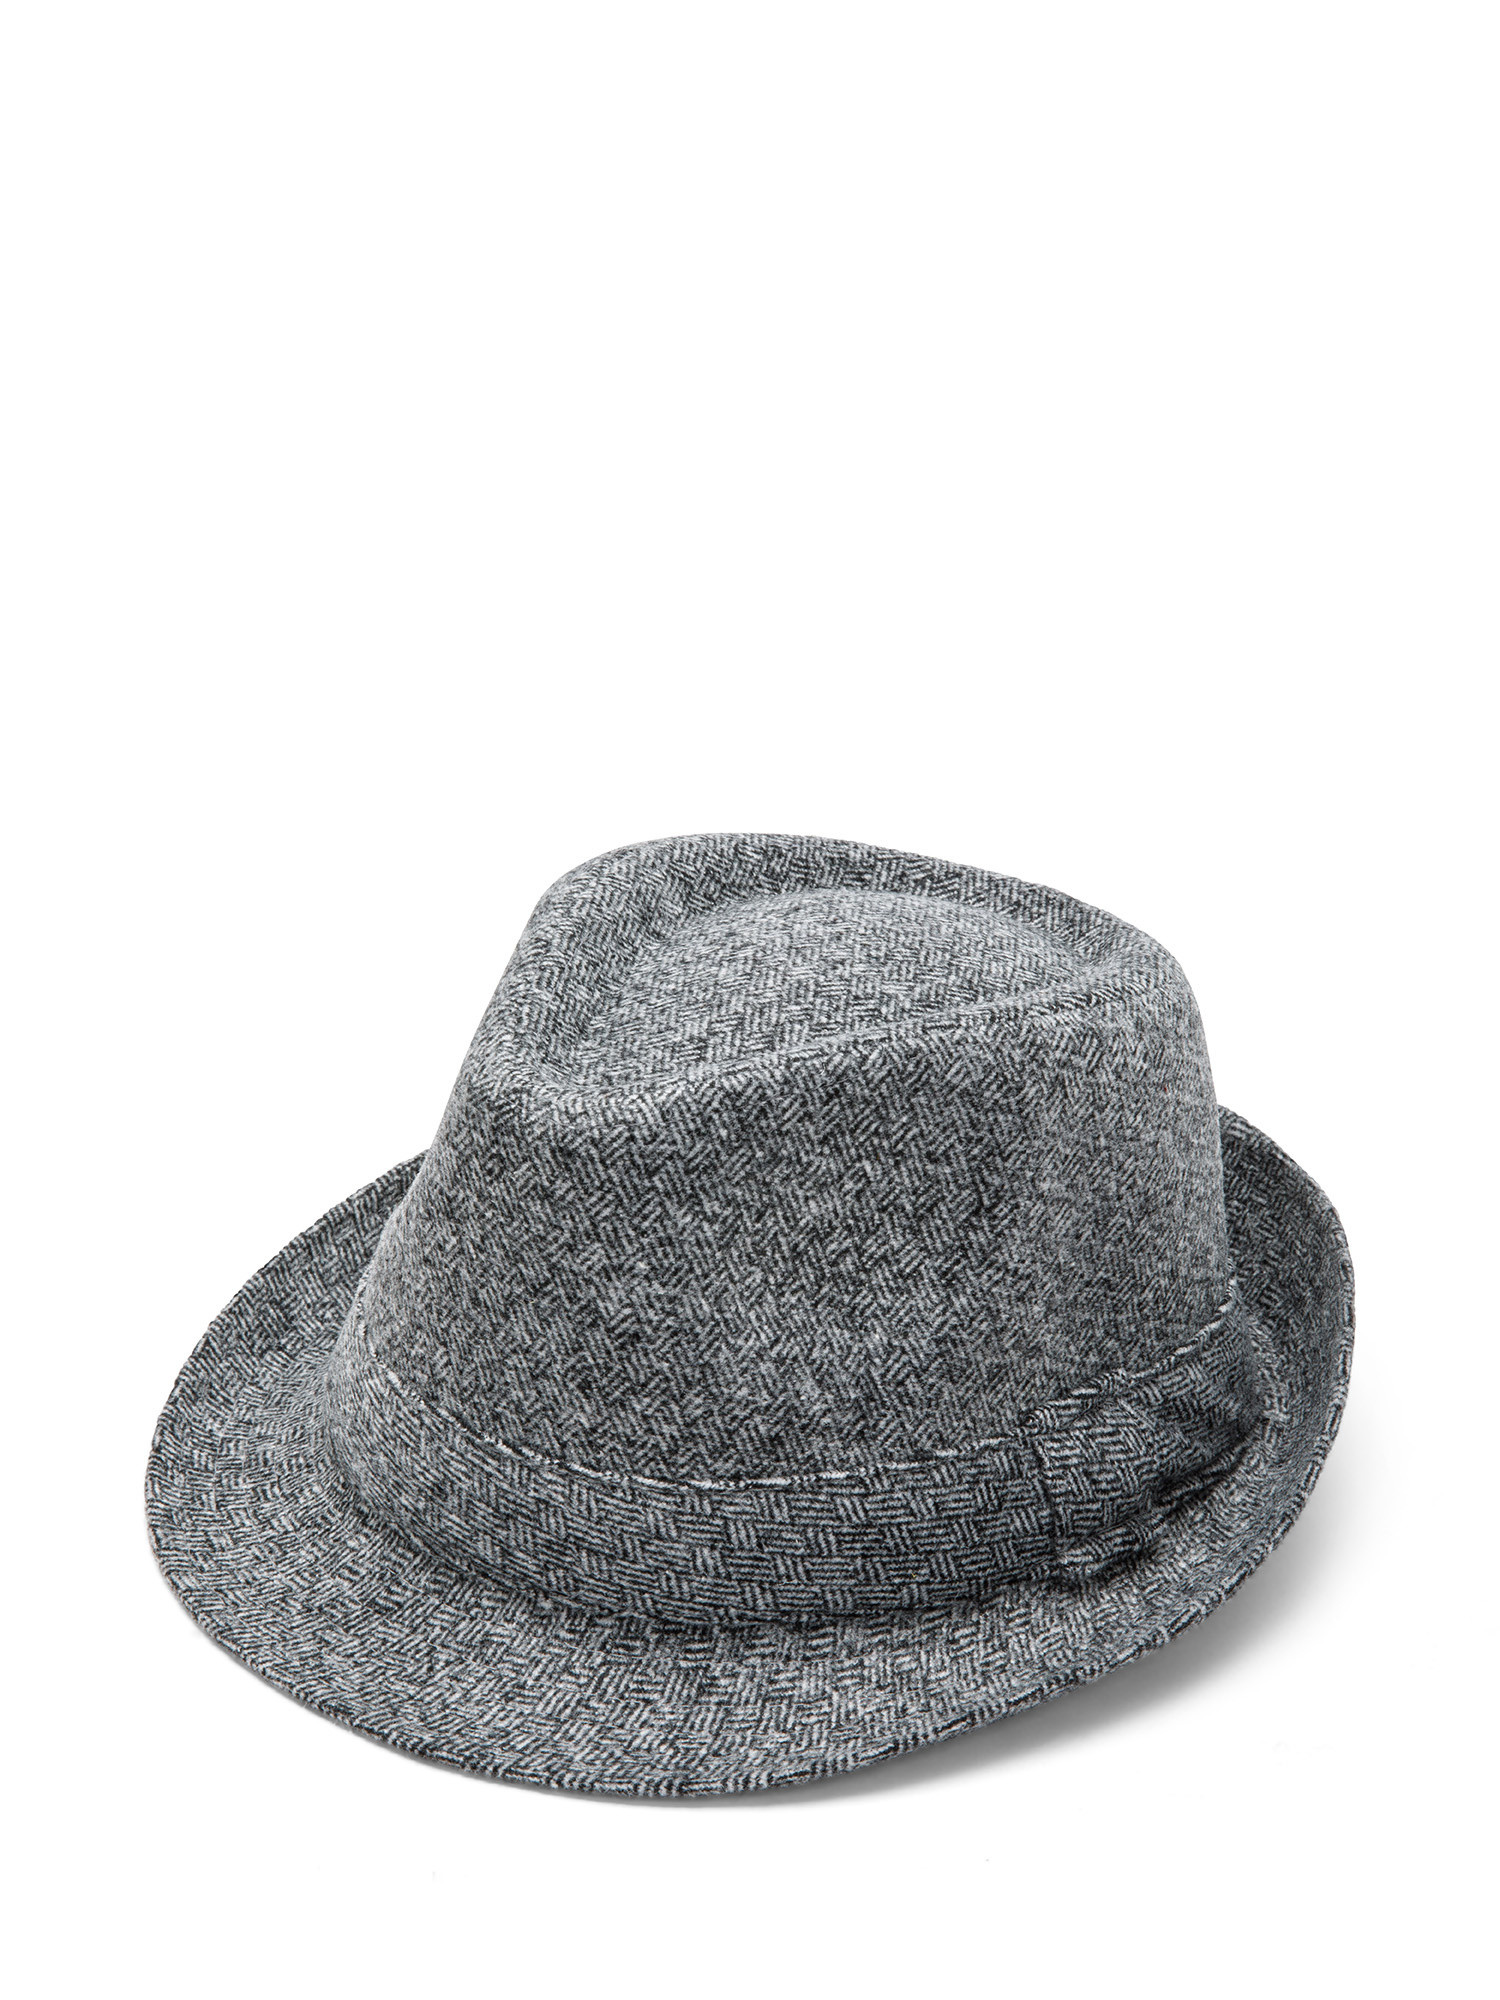 Luca D'Altieri - Barbed alpine hat, White, large image number 0